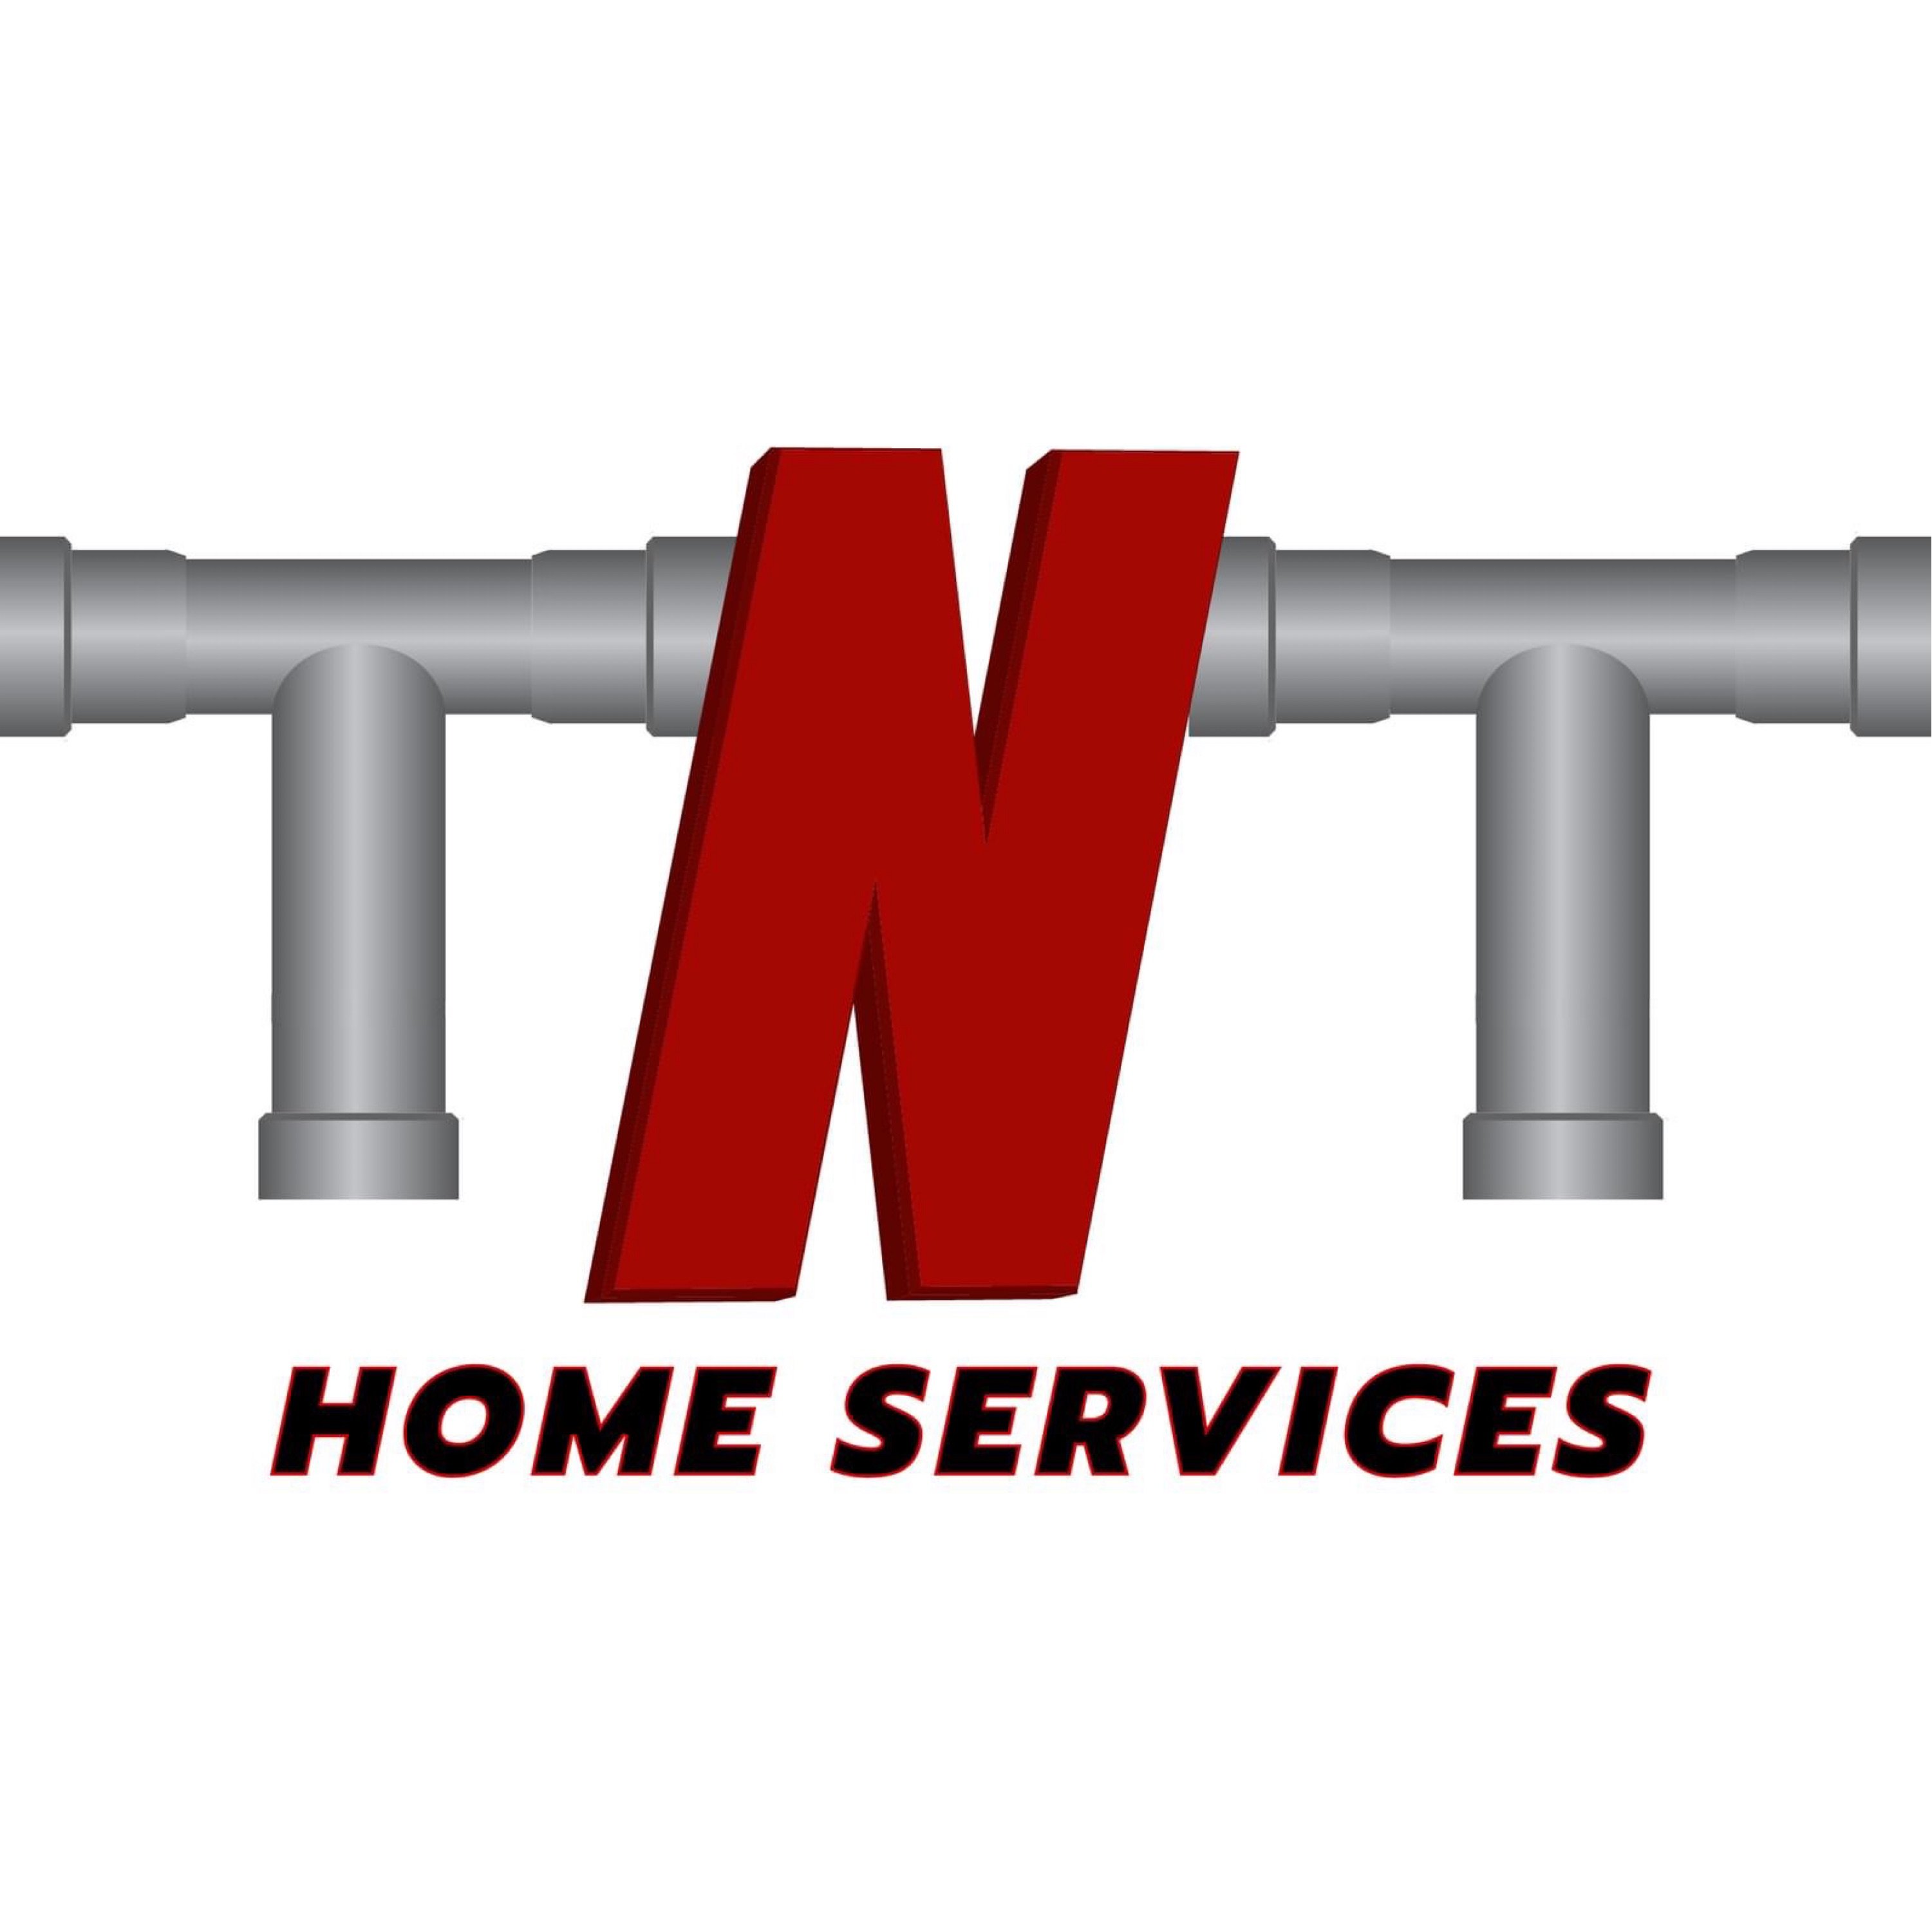 TNT Home Services Logo